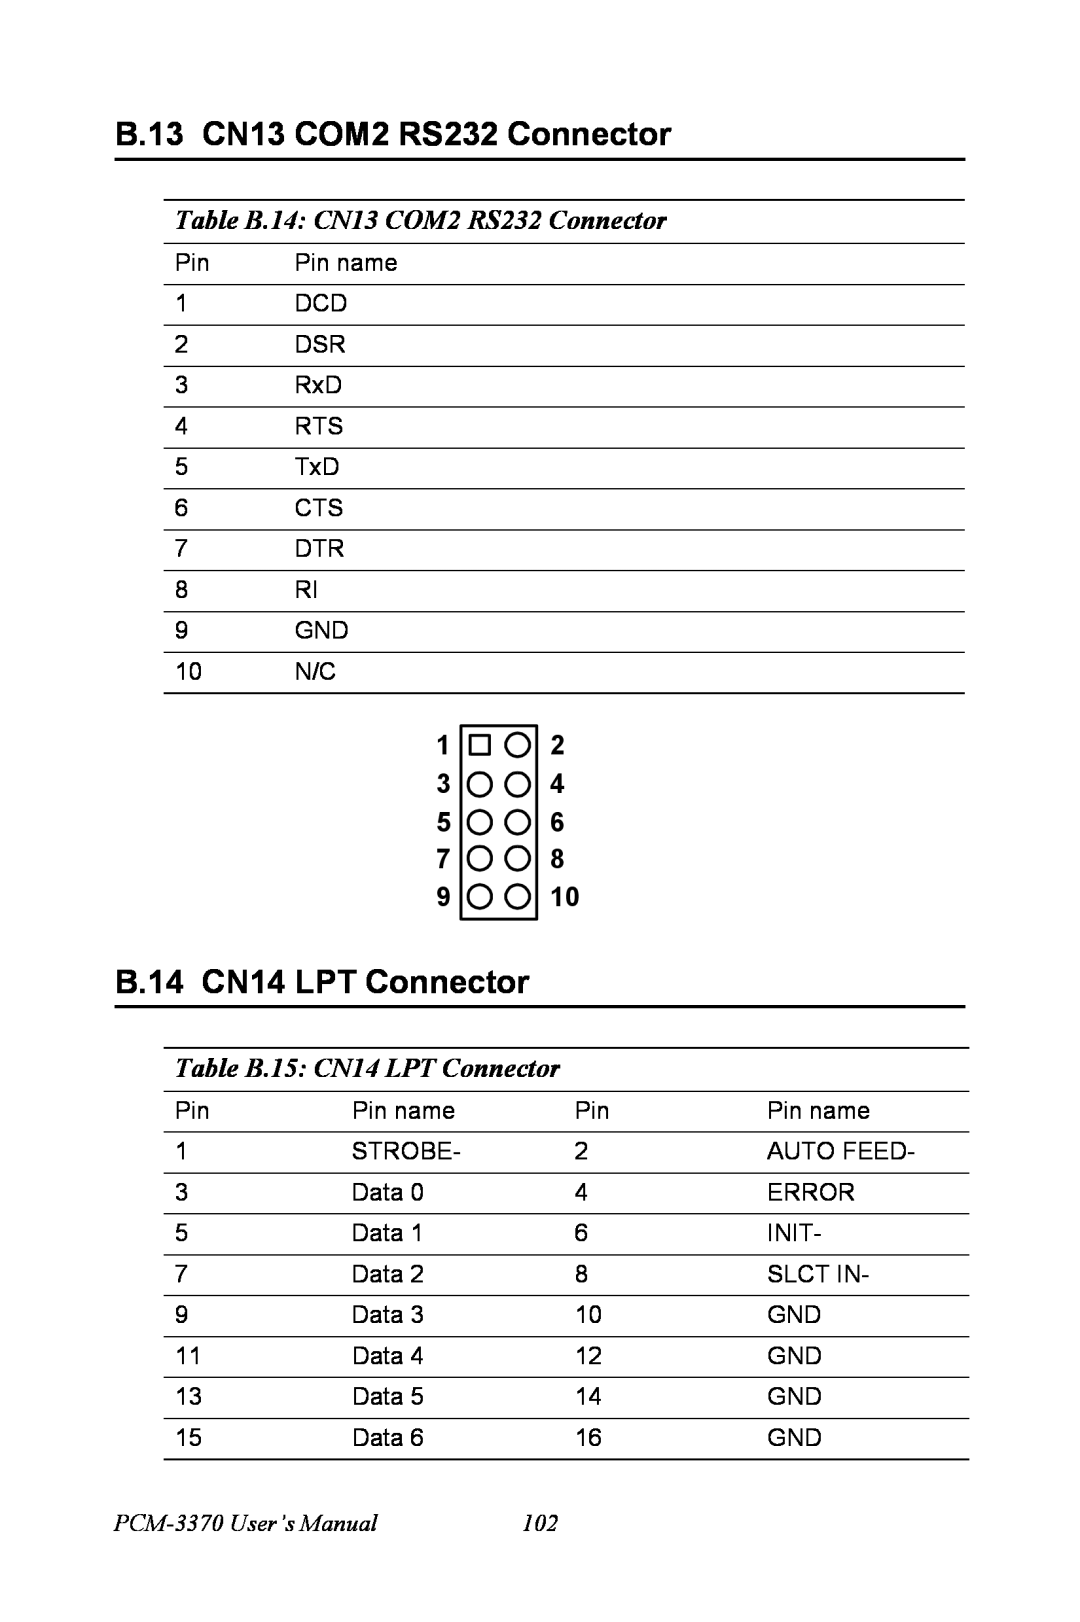 Intel PCM-3370 user manual B.13 CN13 COM2 RS232 Connector, B.14 CN14 LPT Connector, Table B.14 CN13 COM2 RS232 Connector 